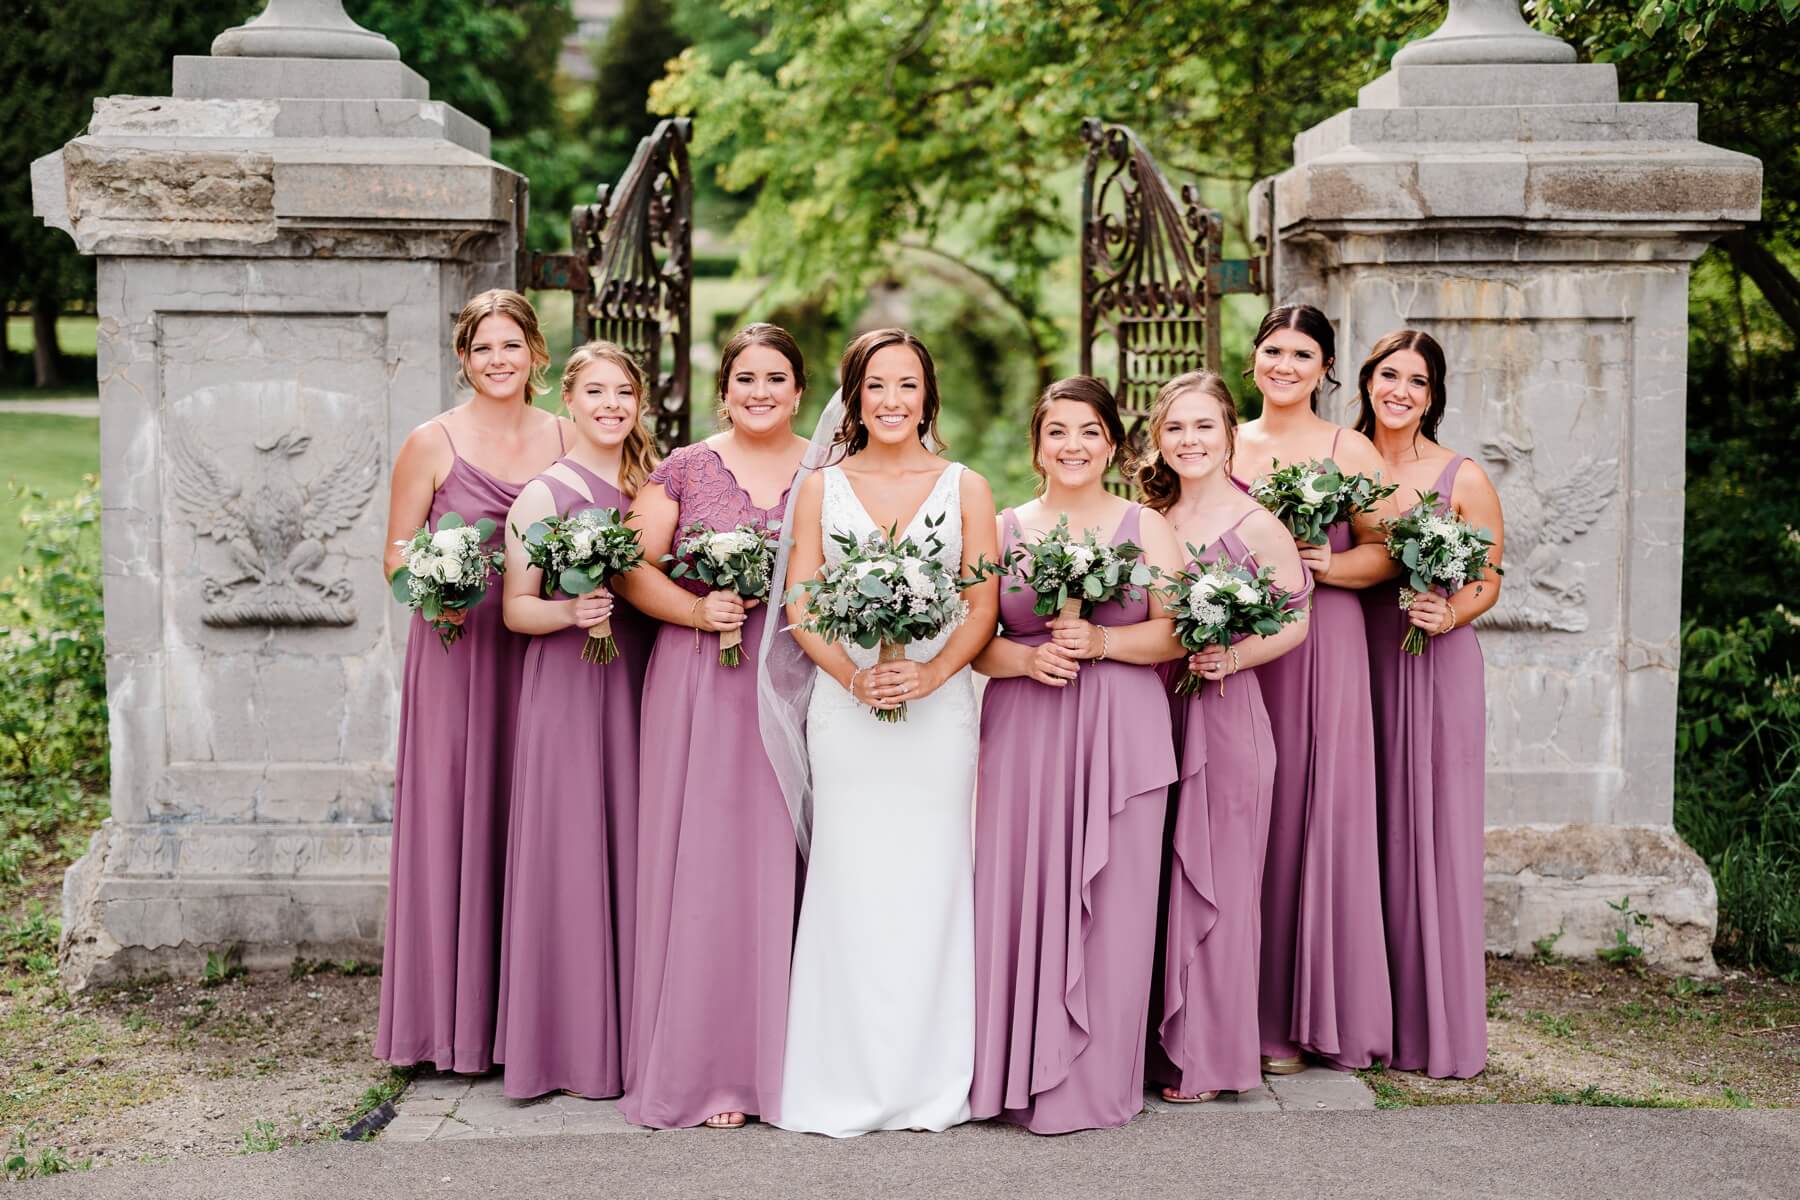 Bride with bridesmaids in purple dresses